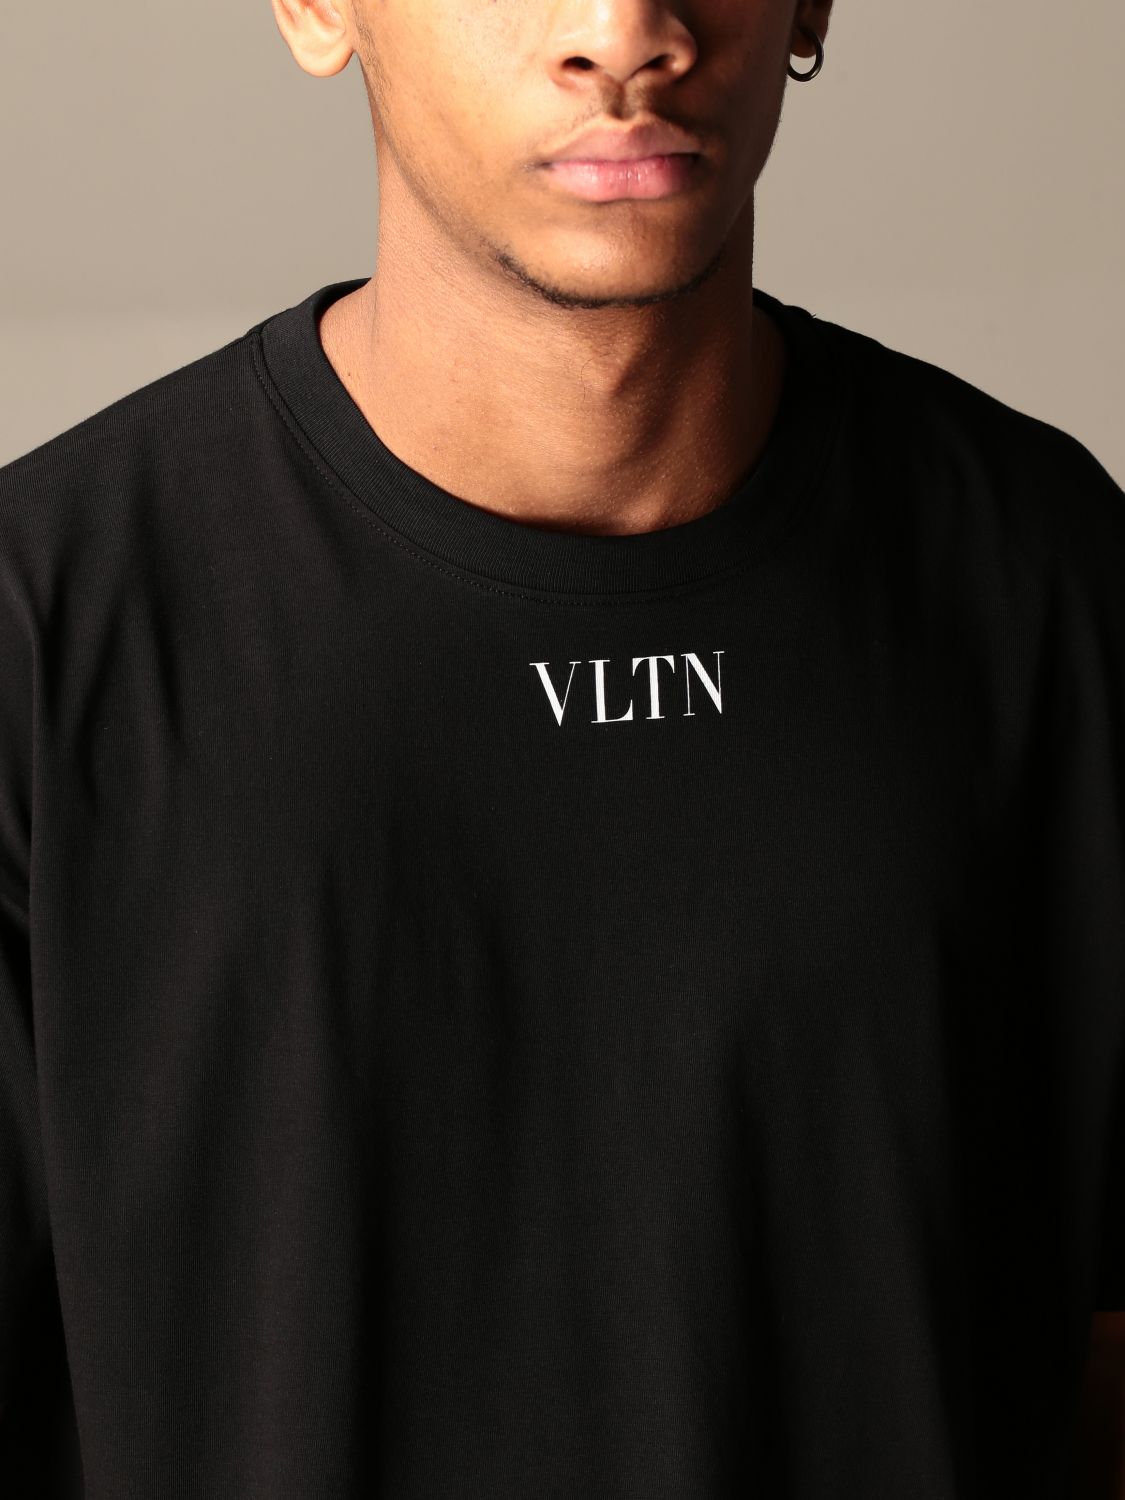 Valentino T Shirt Factory Sale, 52% OFF | www.pegasusaerogroup.com